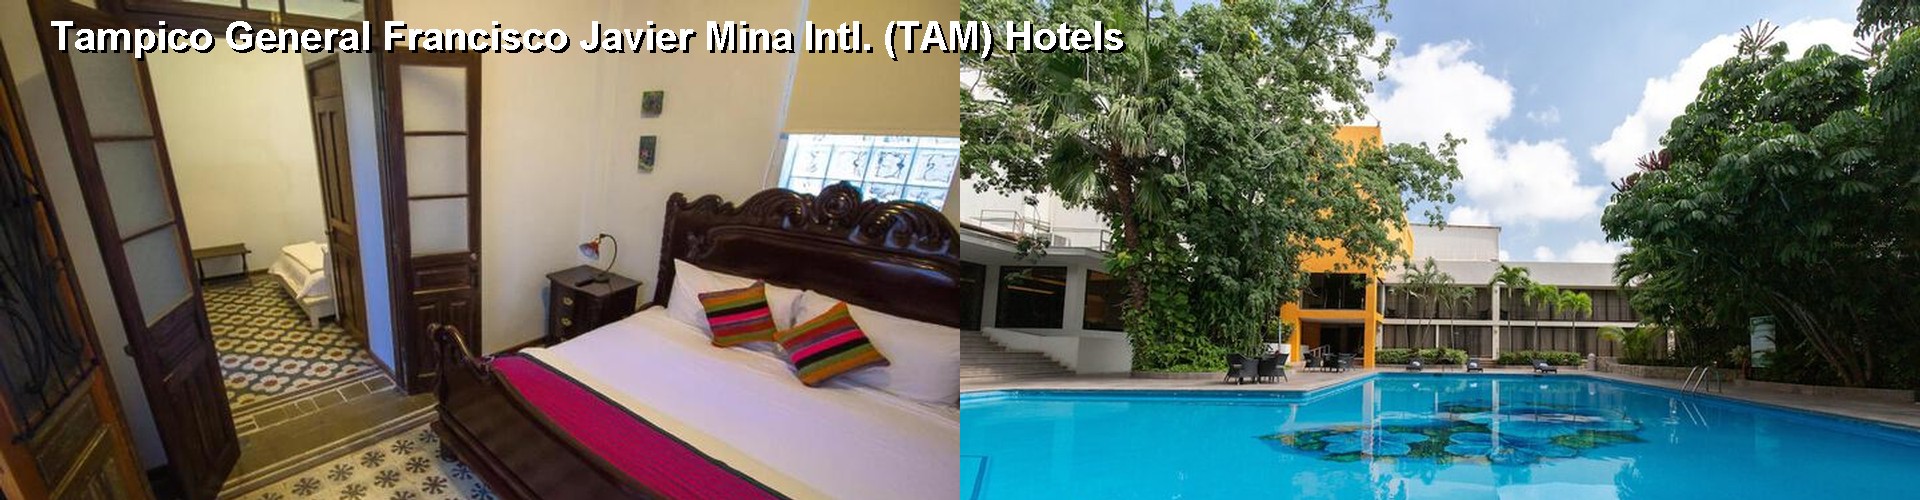 5 Best Hotels near Tampico General Francisco Javier Mina Intl. (TAM)